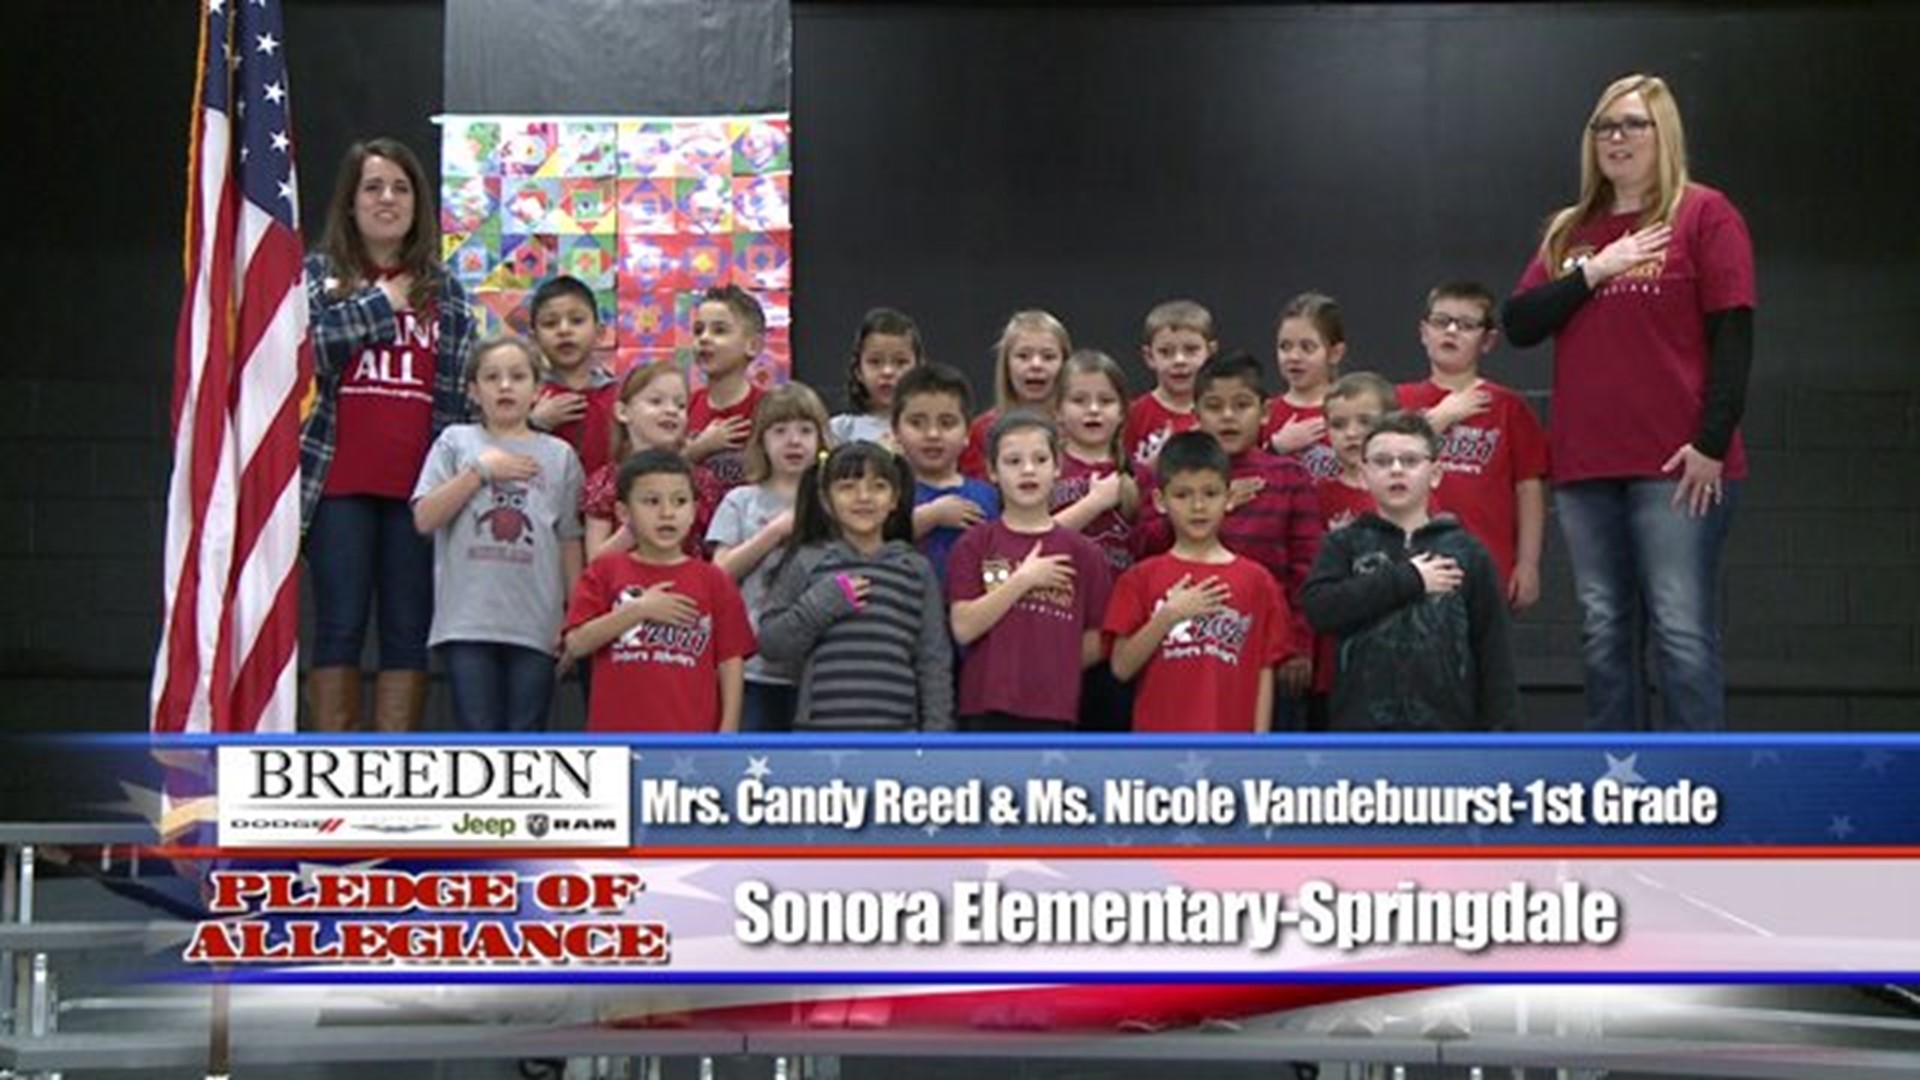 Sonora Elementary, Springdale - Mrs. Candy Reed & Ms. Nicole Vandebuurst - 1st Grade